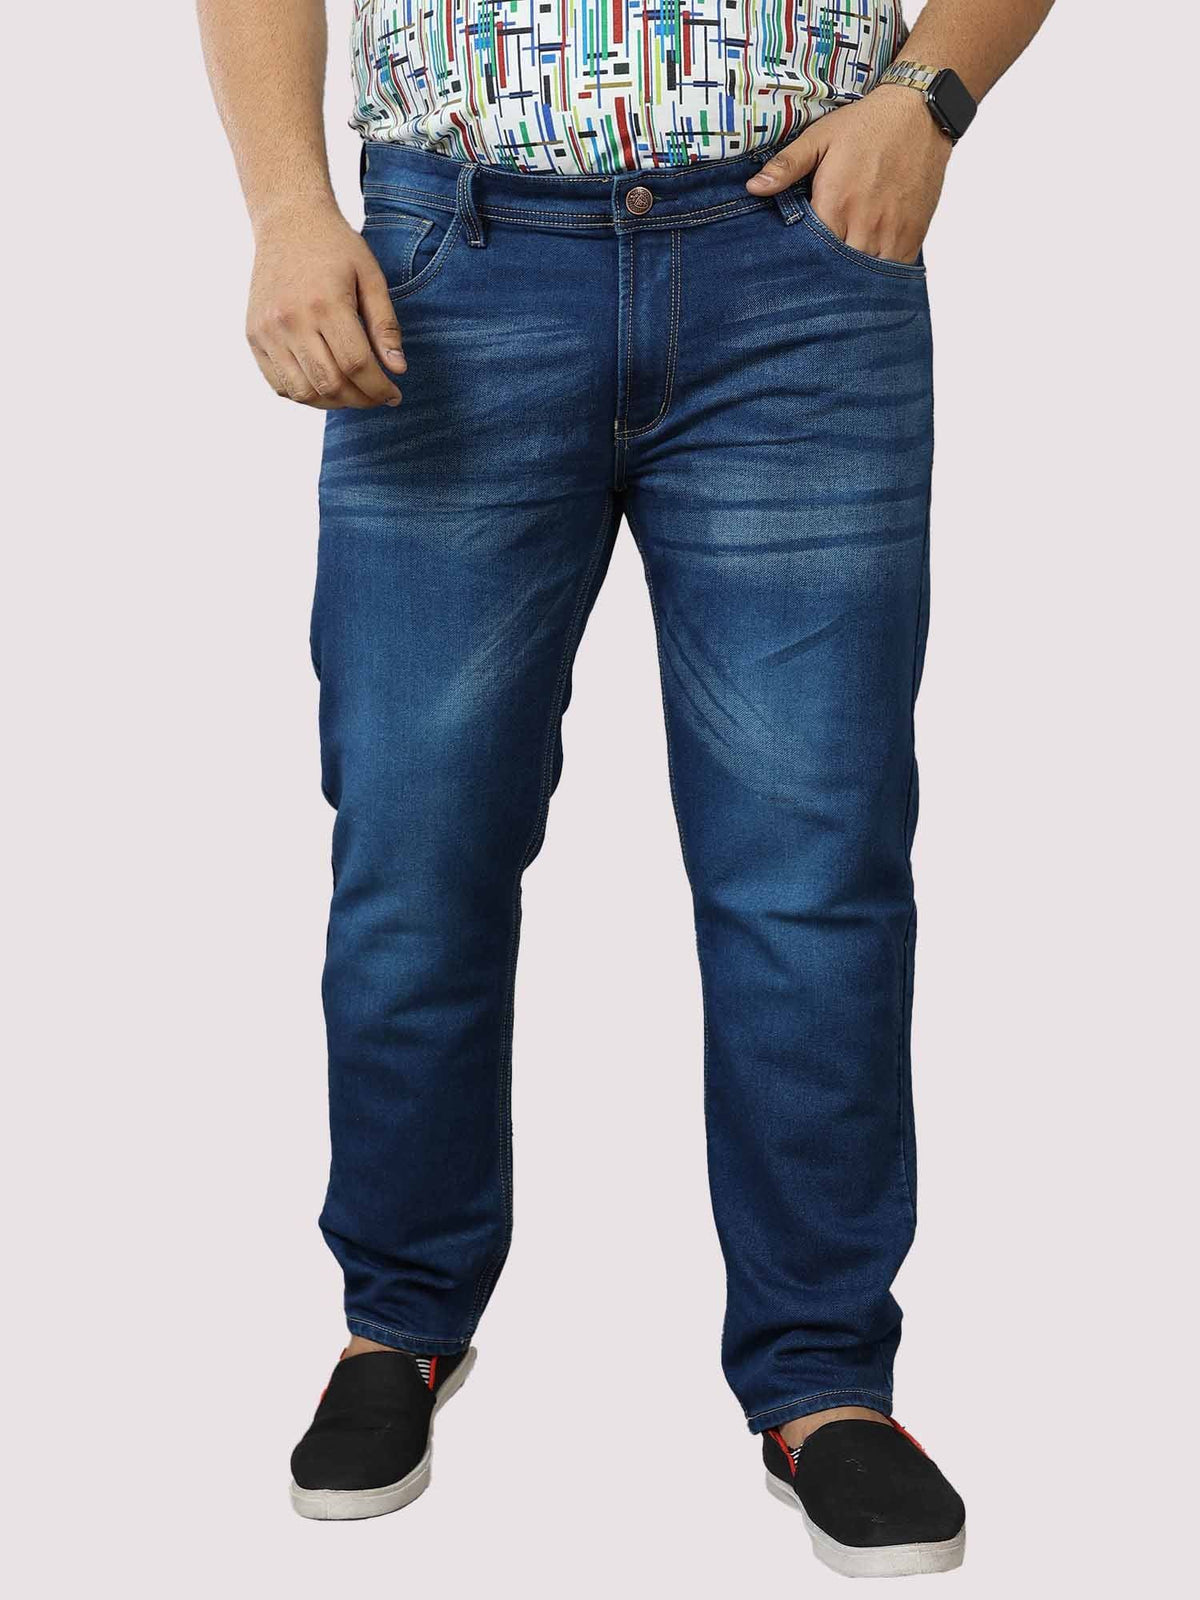 NEW FBRK BLUE FADED Ripped Jeans, MEN Size 32/32 *** | eBay